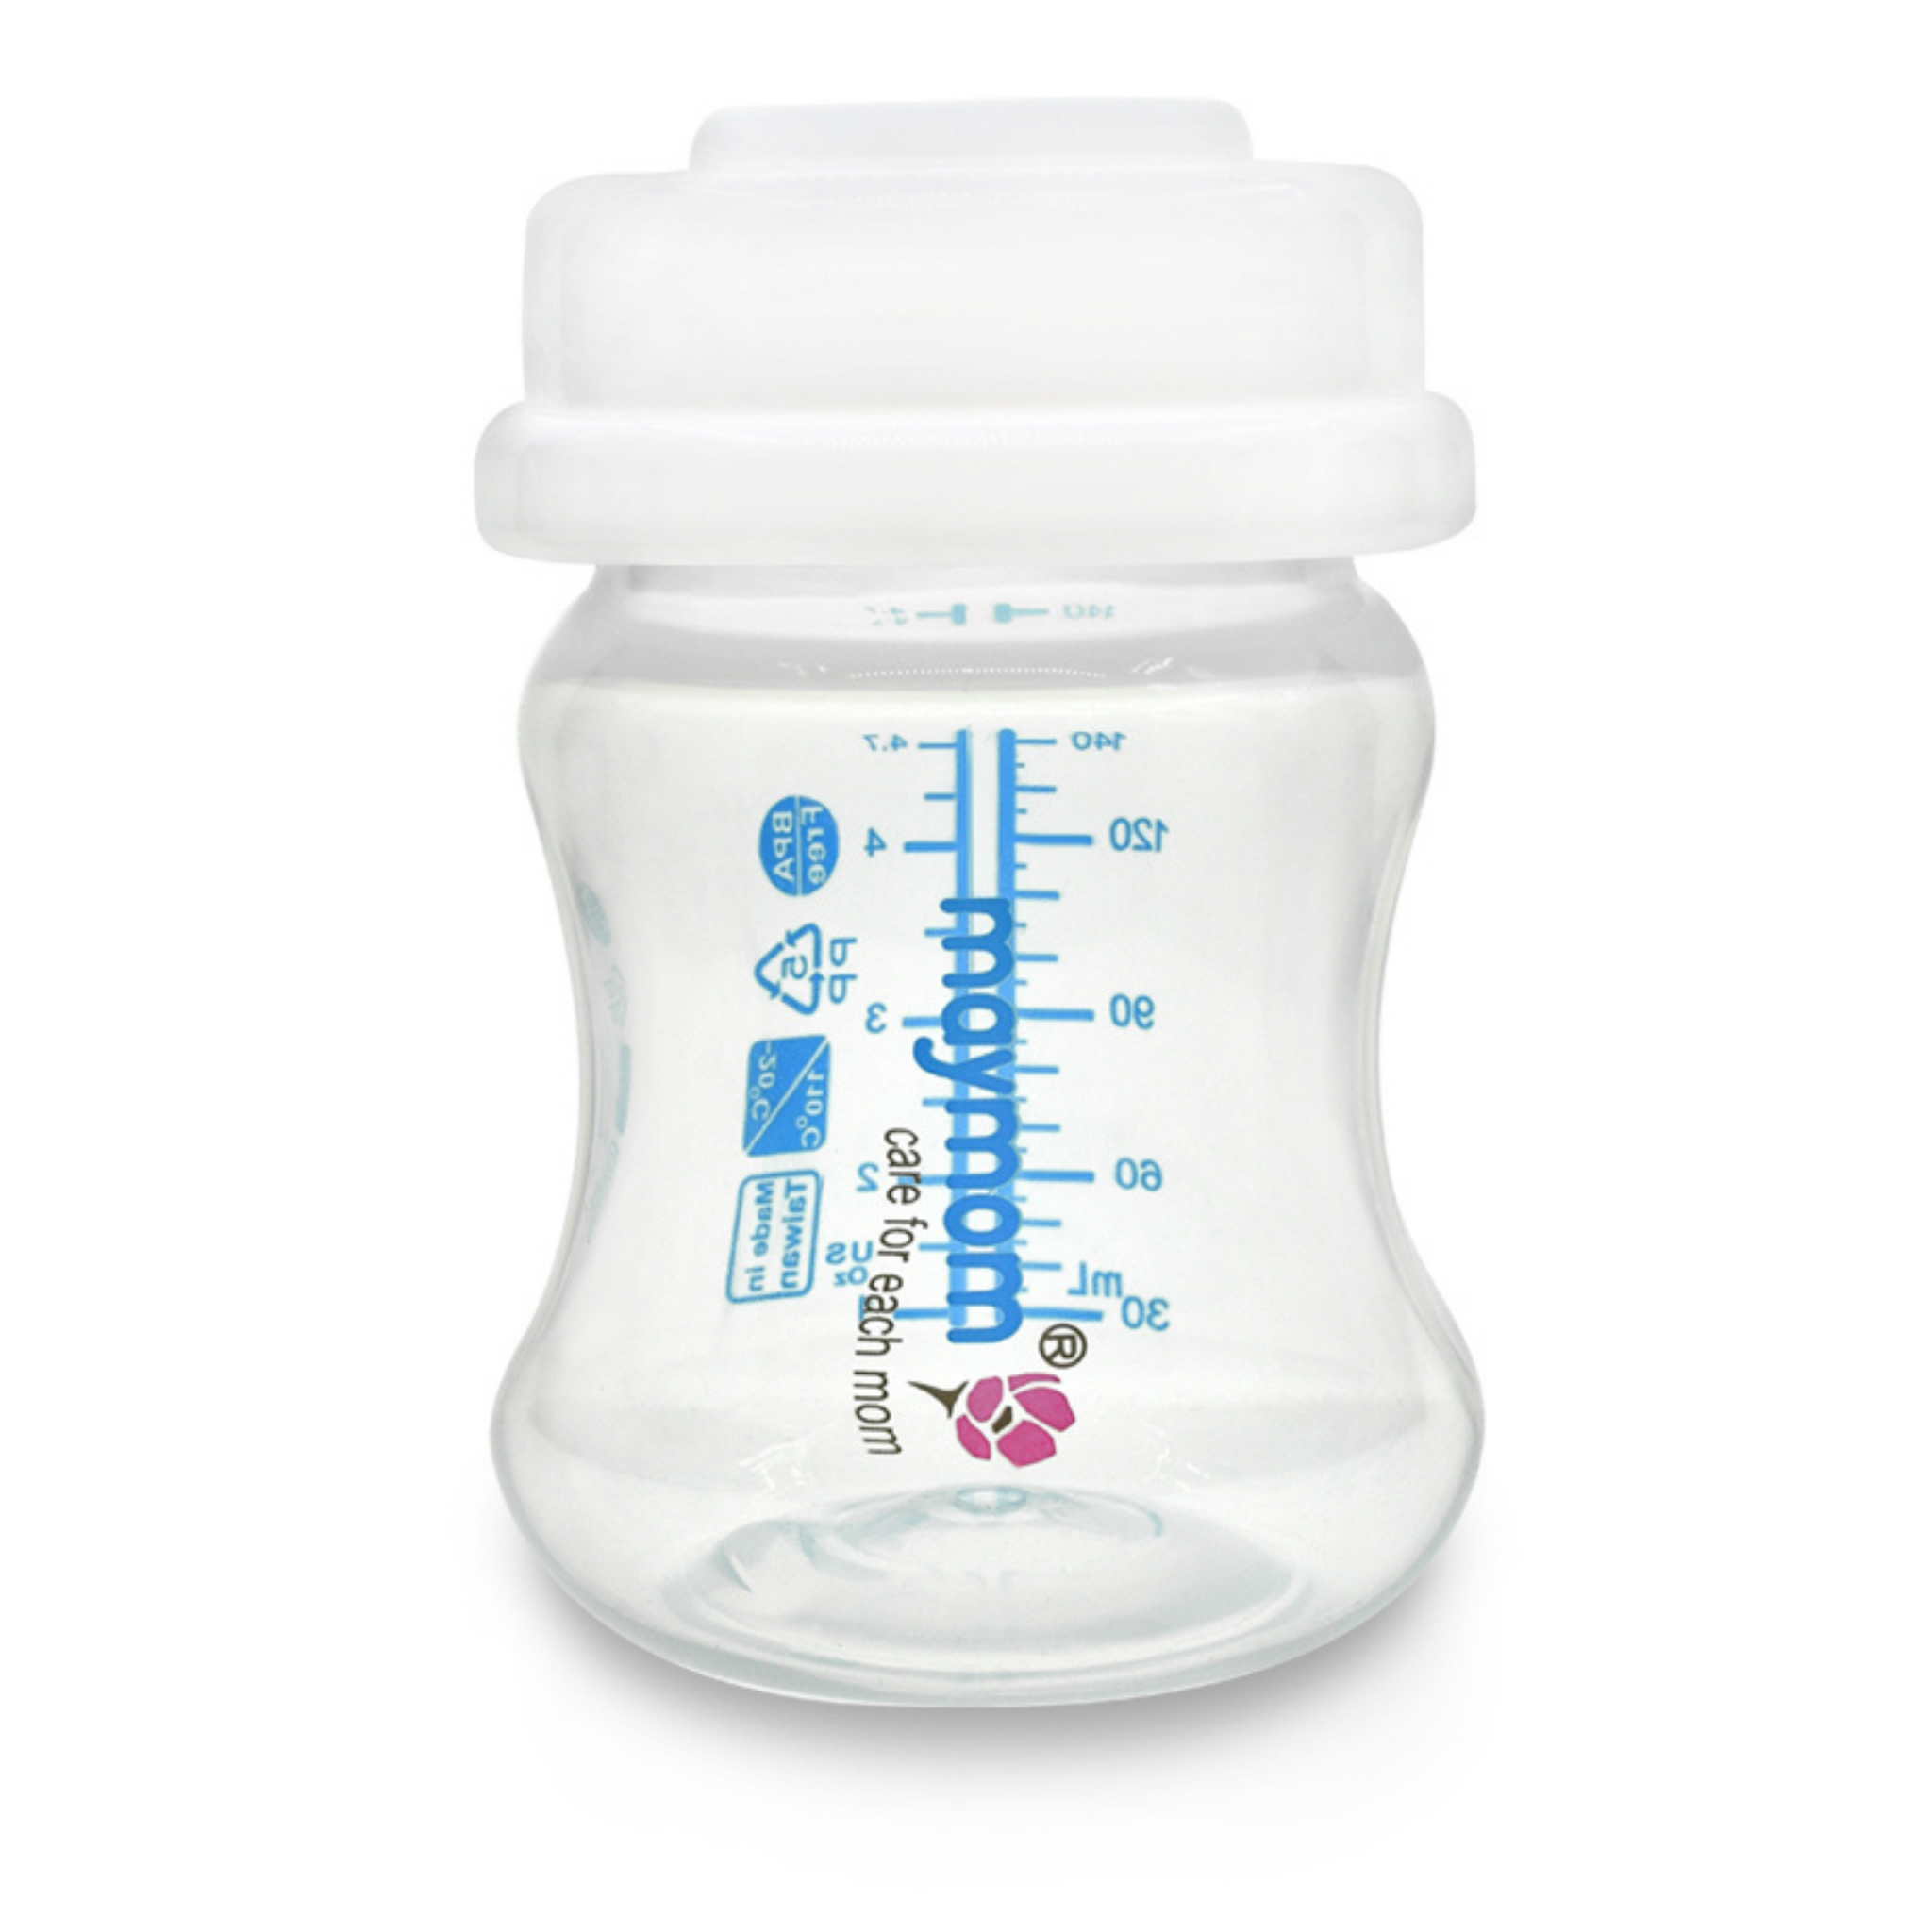 Spectra Baby Wide-Neck Milk Storage Bottles - 5 oz (Pack of 2)